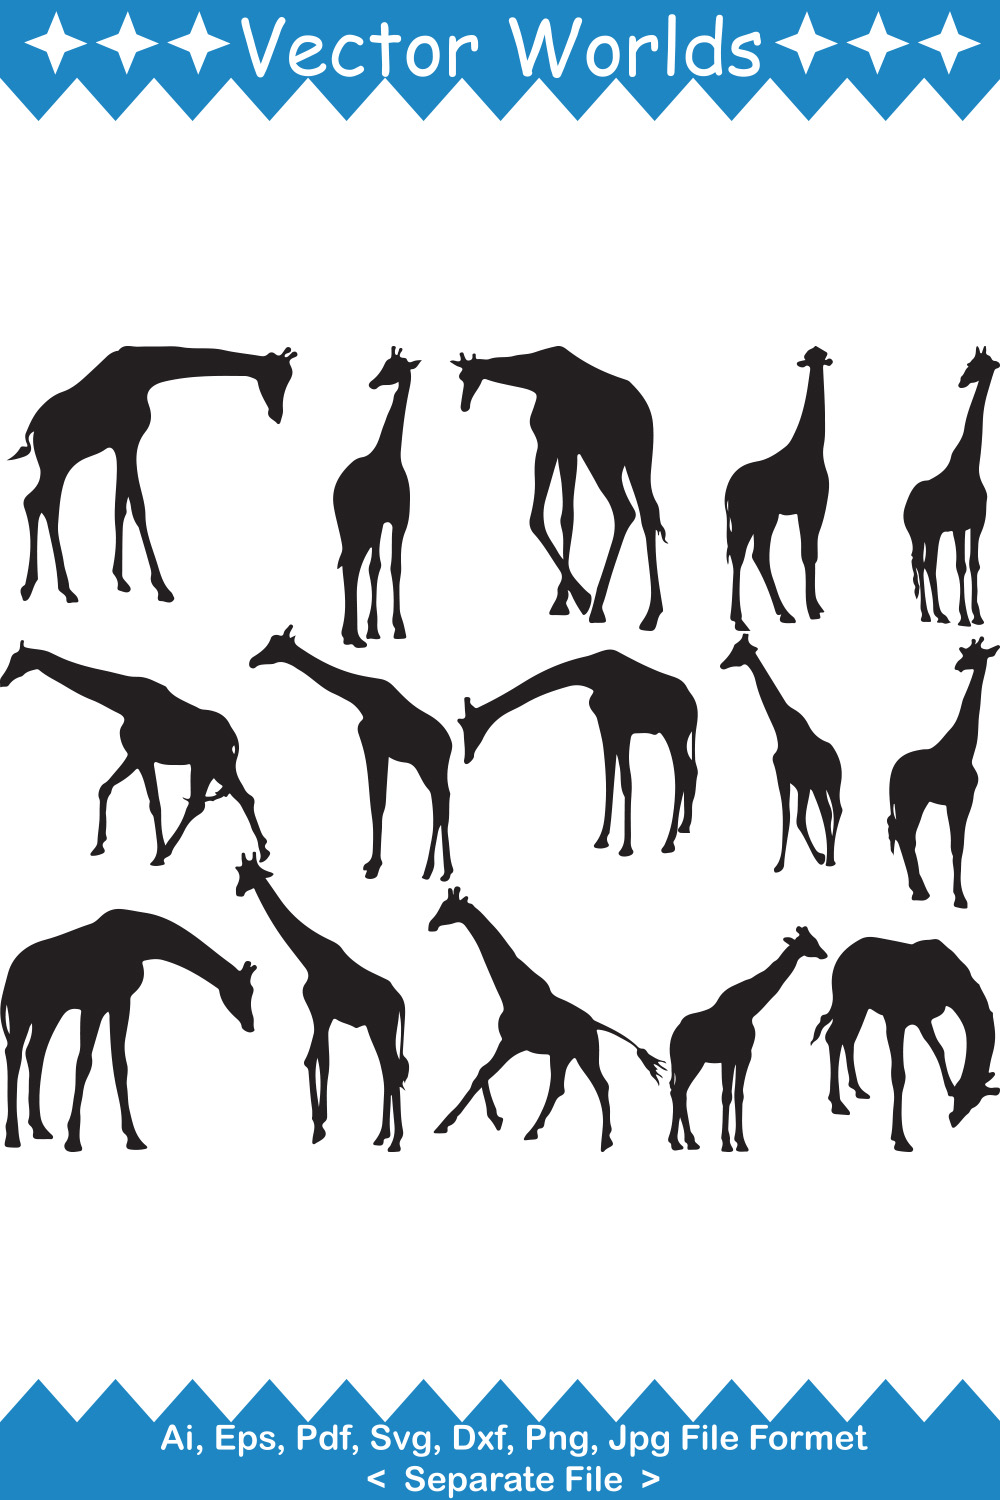 SVG Cut Files for Cricut and Silhouette - Giraffe Silhouettes SVG